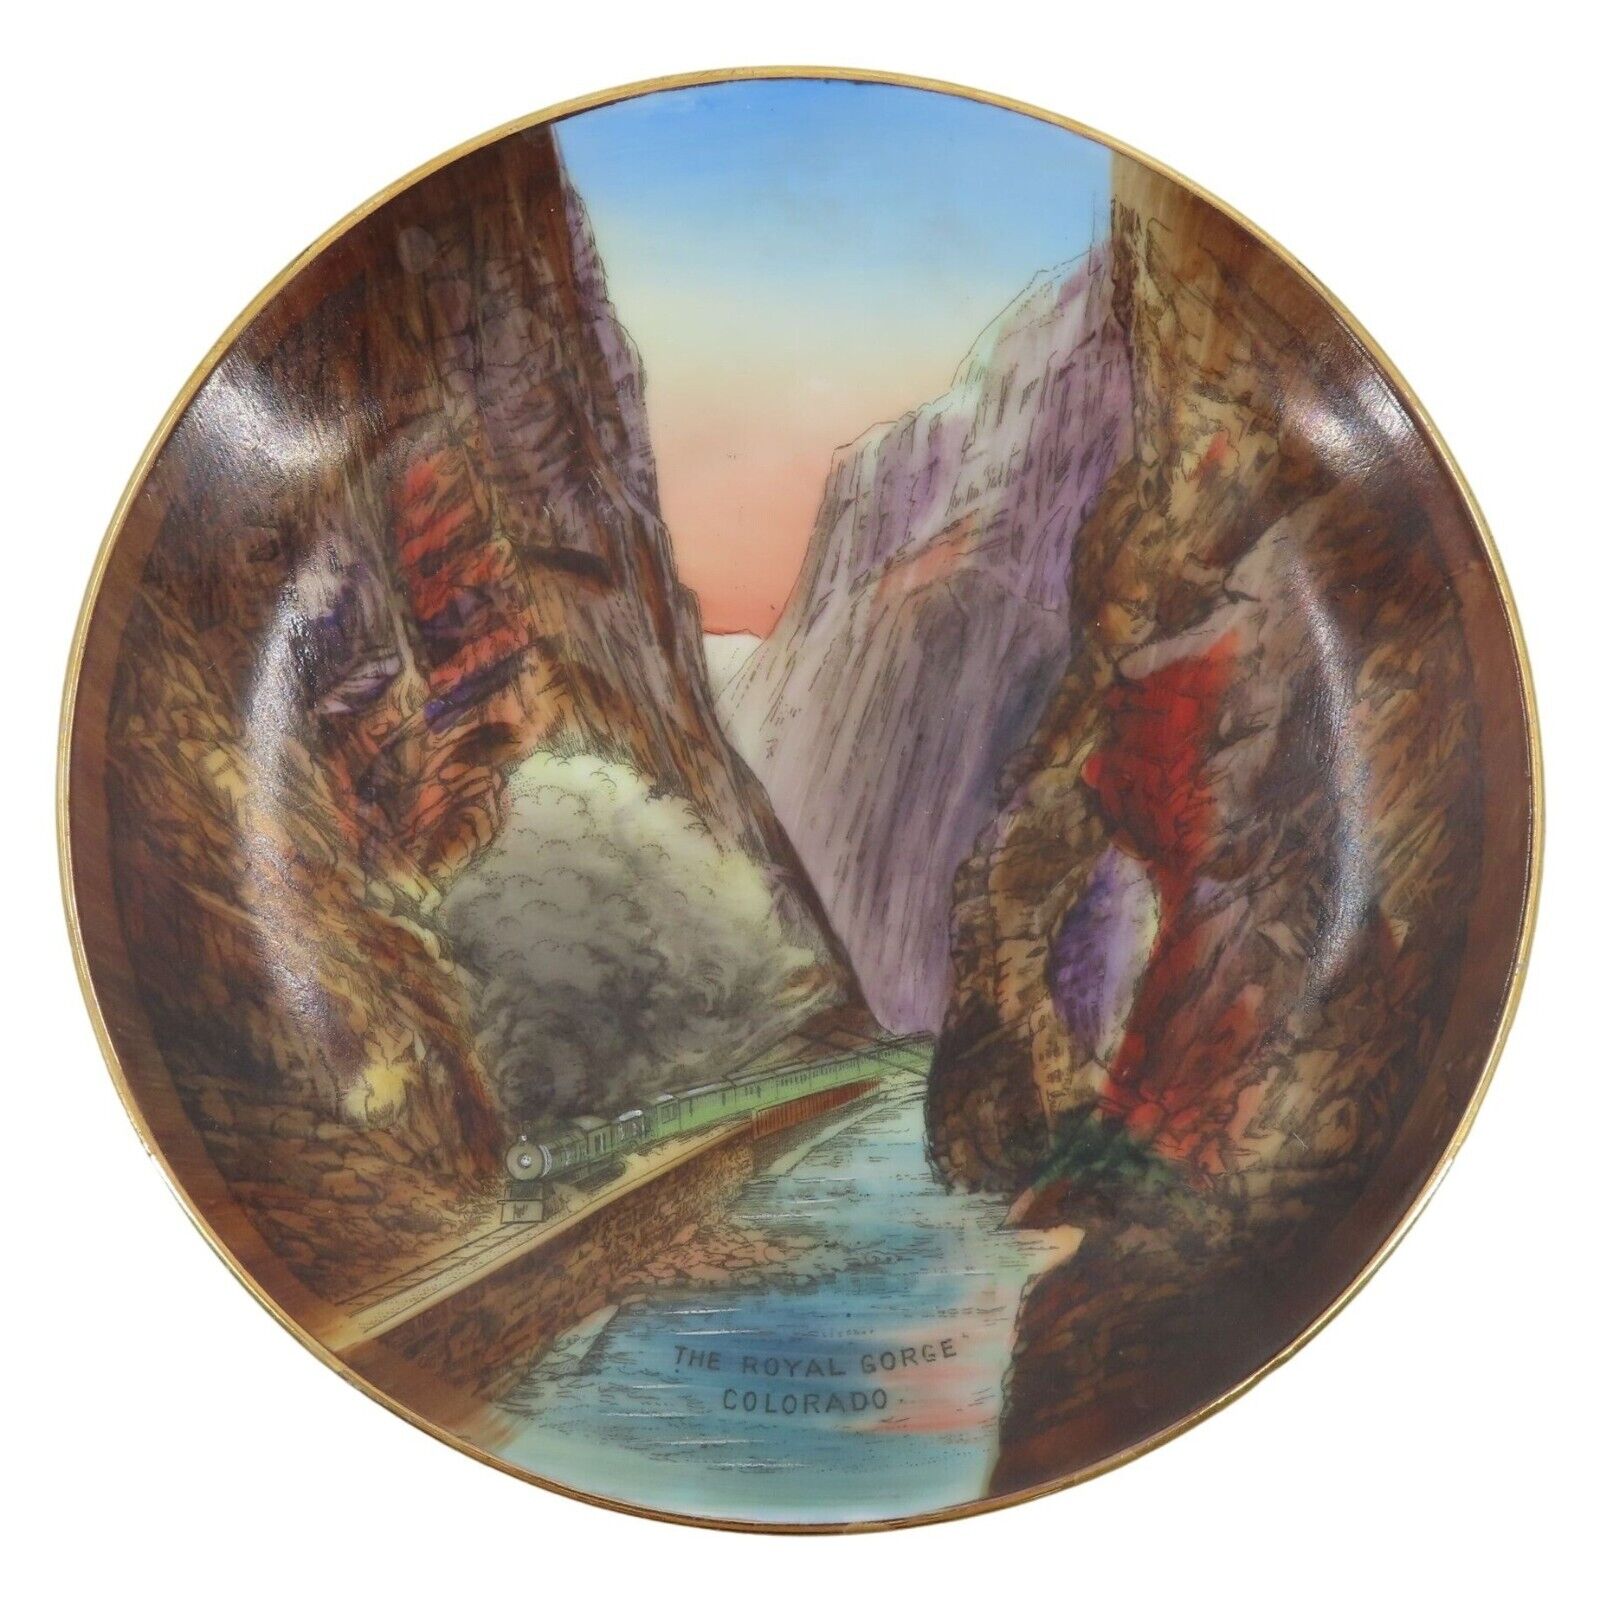 VTG Jonroth Studios Germany The Royal Gorge Colorado Hand Painted Souvenir Plate